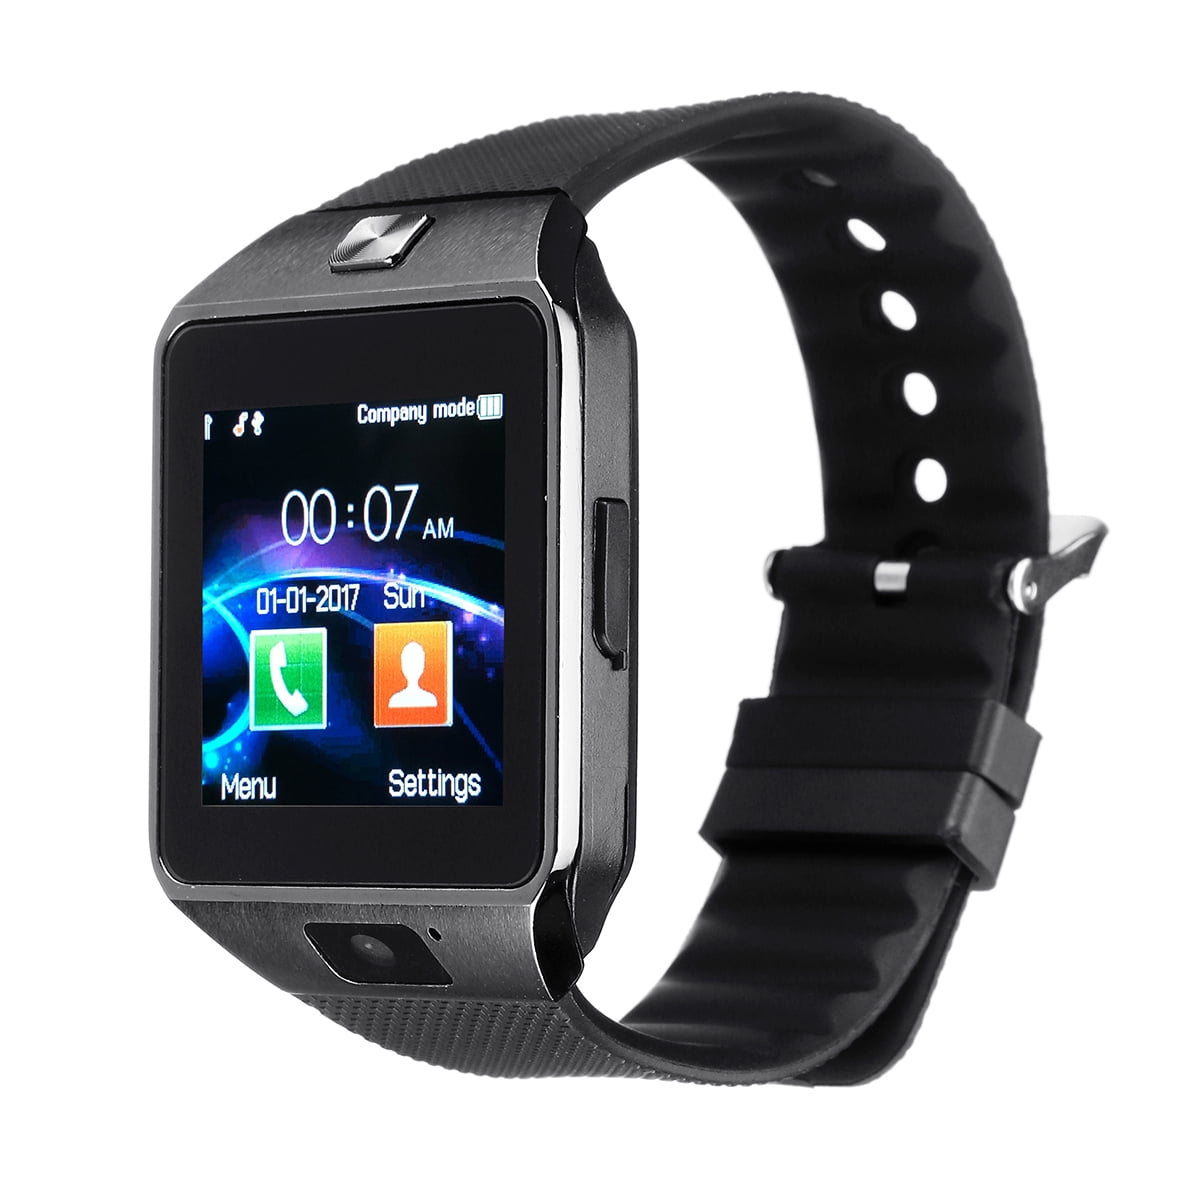 GITZN09 Bluetooth Smartwatch Touchscreen Wrist Smart Phone Watch Sports Fitness Tracker SIM SD Card Slot Camera Pedometer Compatible iOS Android Kids